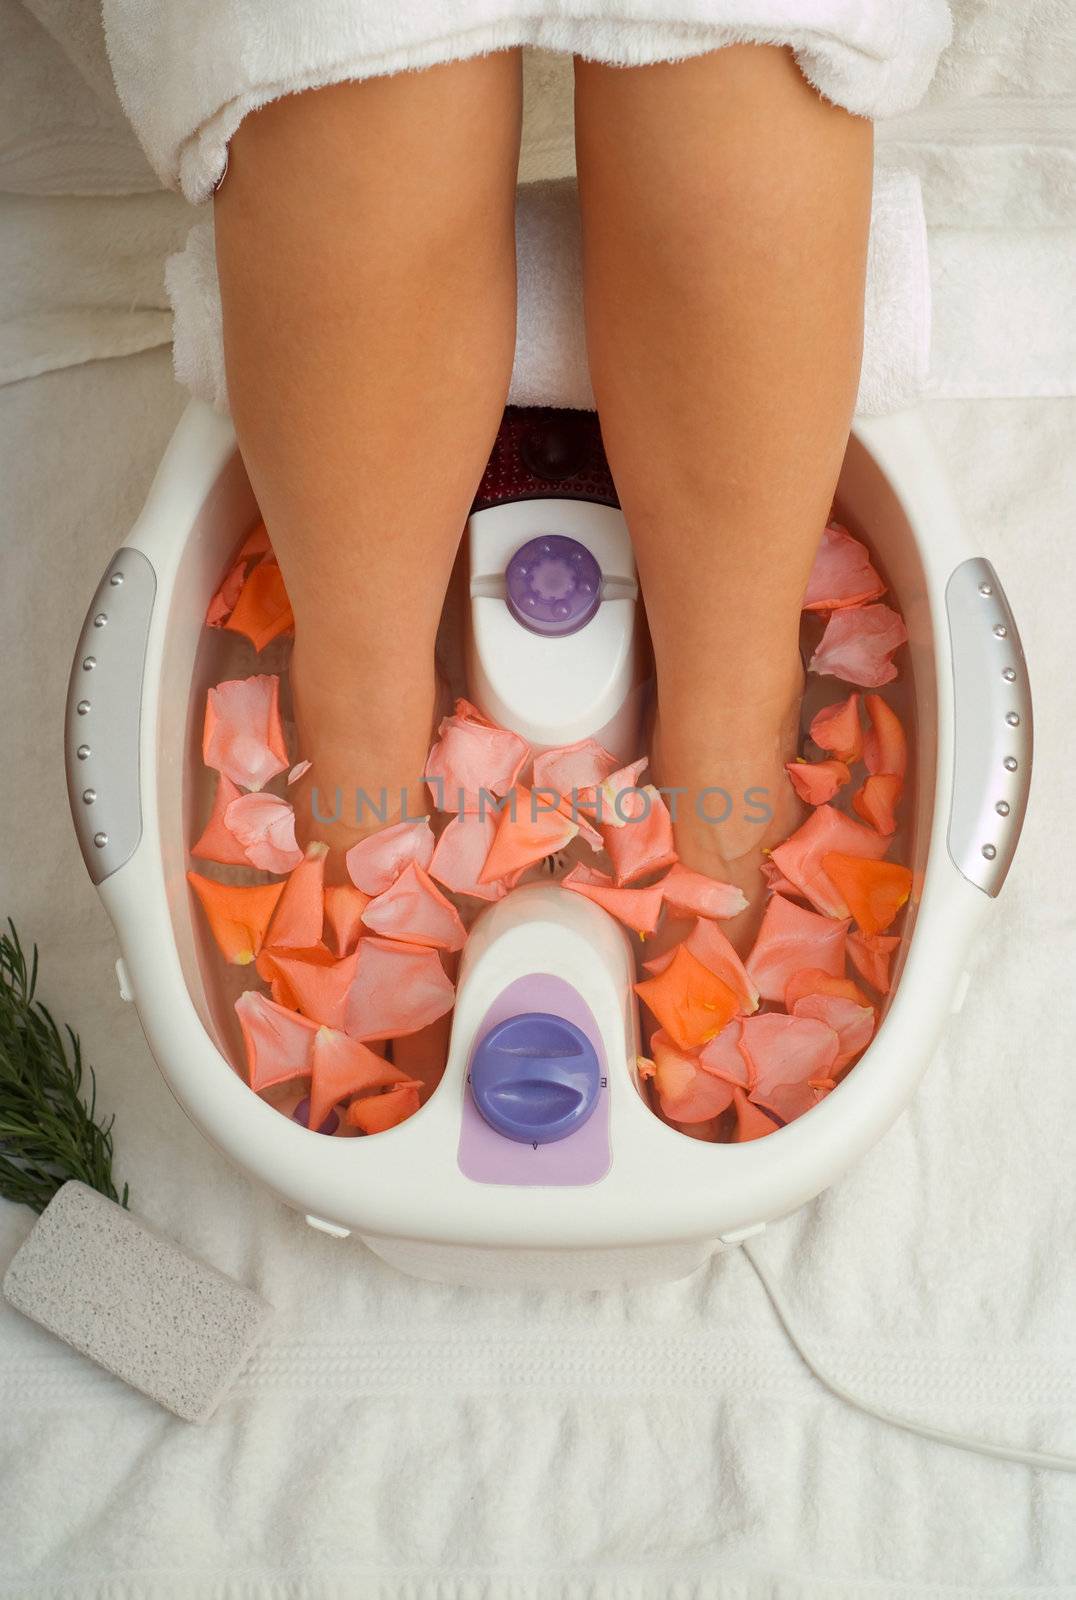 Womens feet in massage spa bath with flower petals